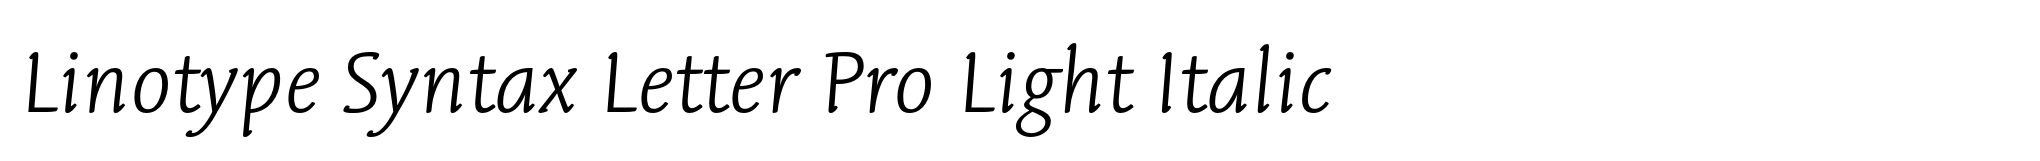 Linotype Syntax Letter Pro Light Italic image